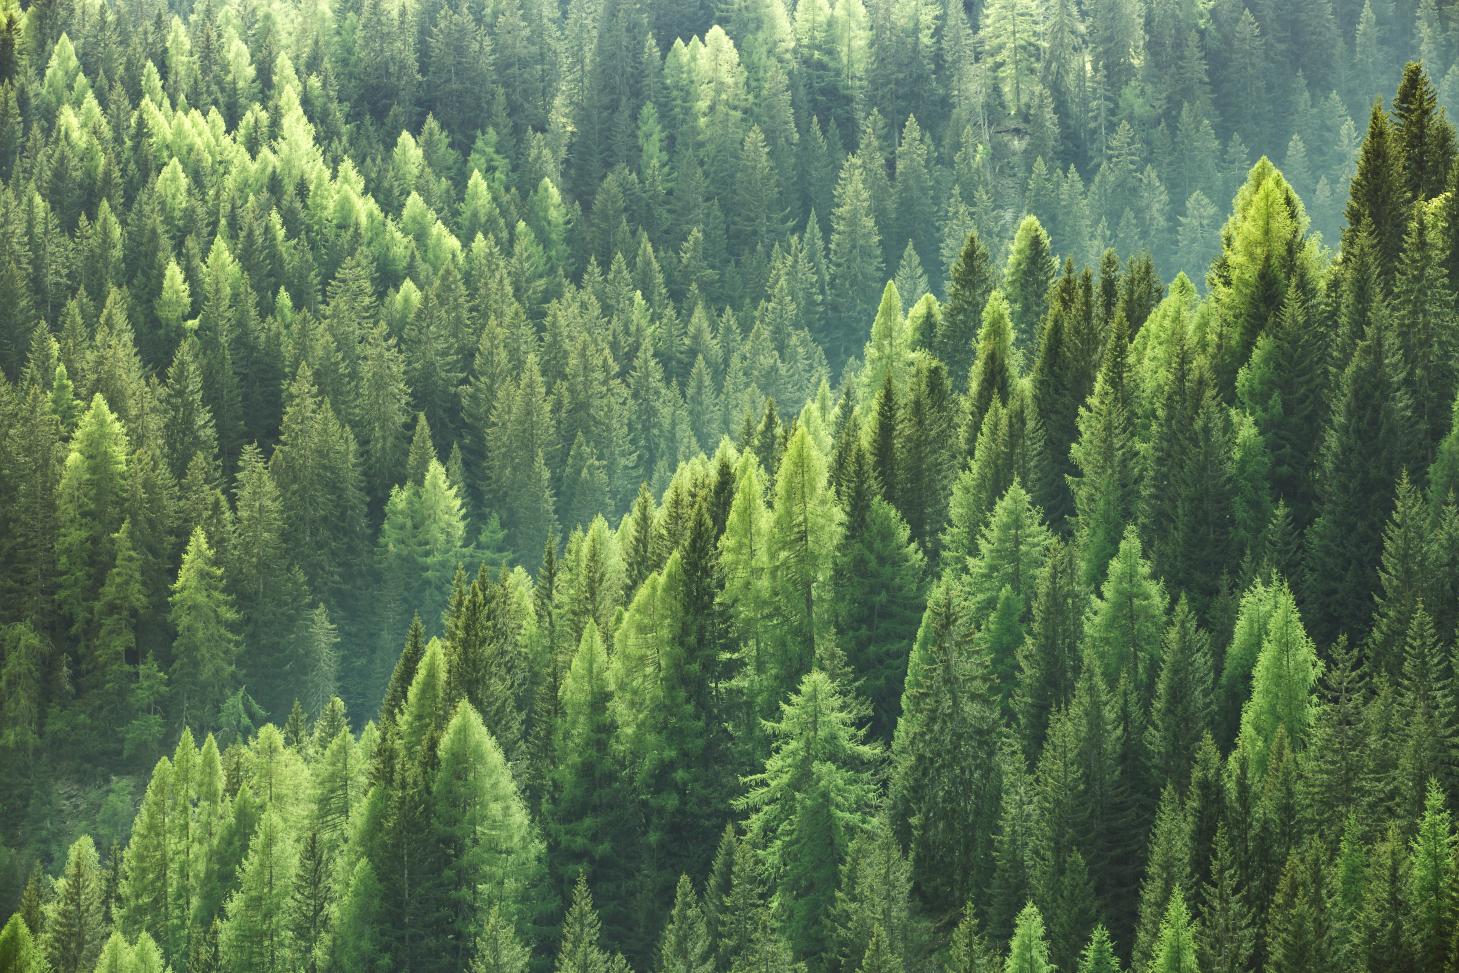 A coniferous forest